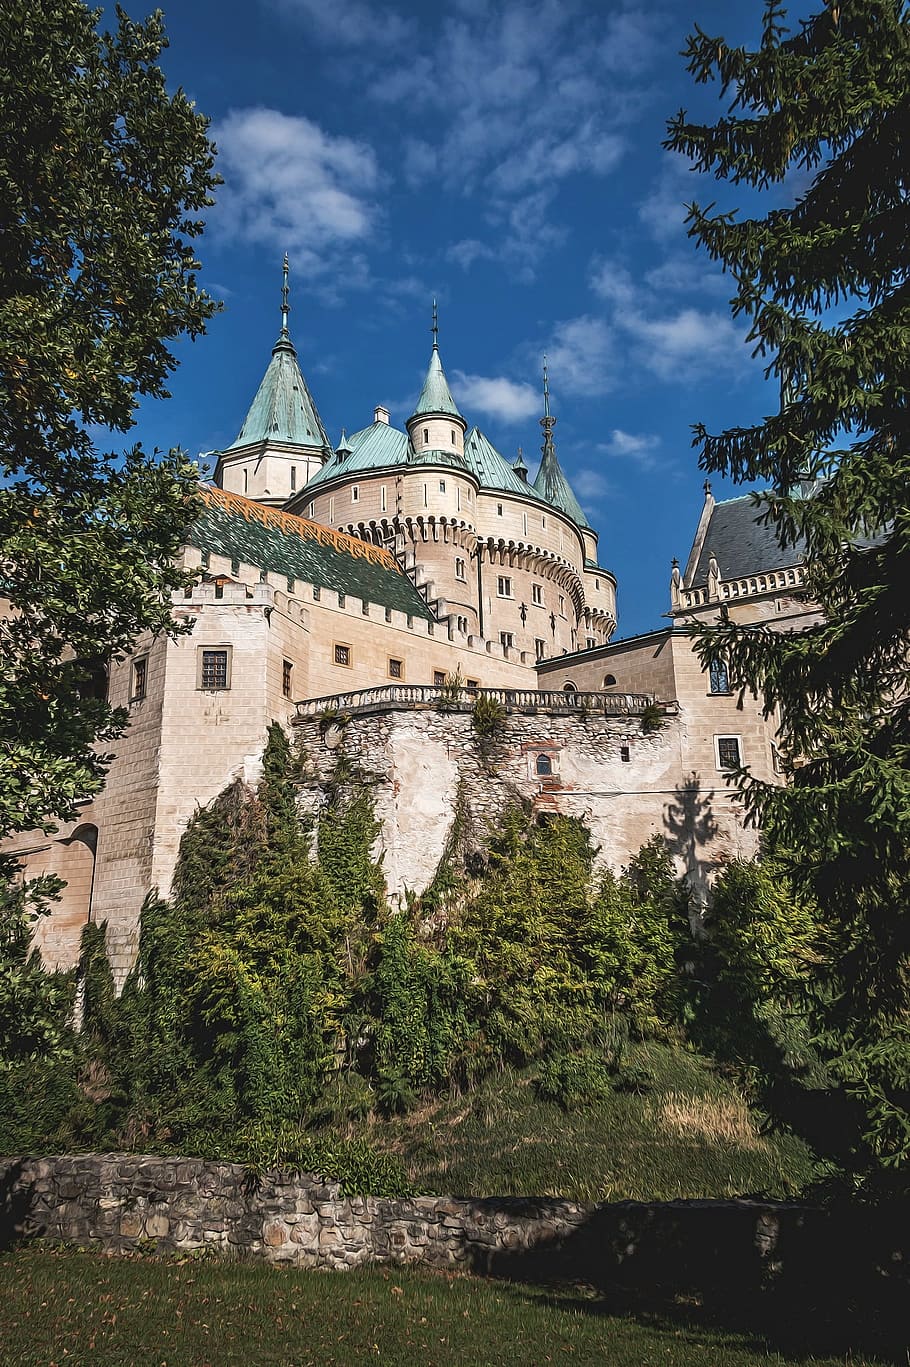 bojnice, bojnice castle, lock, fairy tale, slovakia, history, architecture, tree, building exterior, built structure